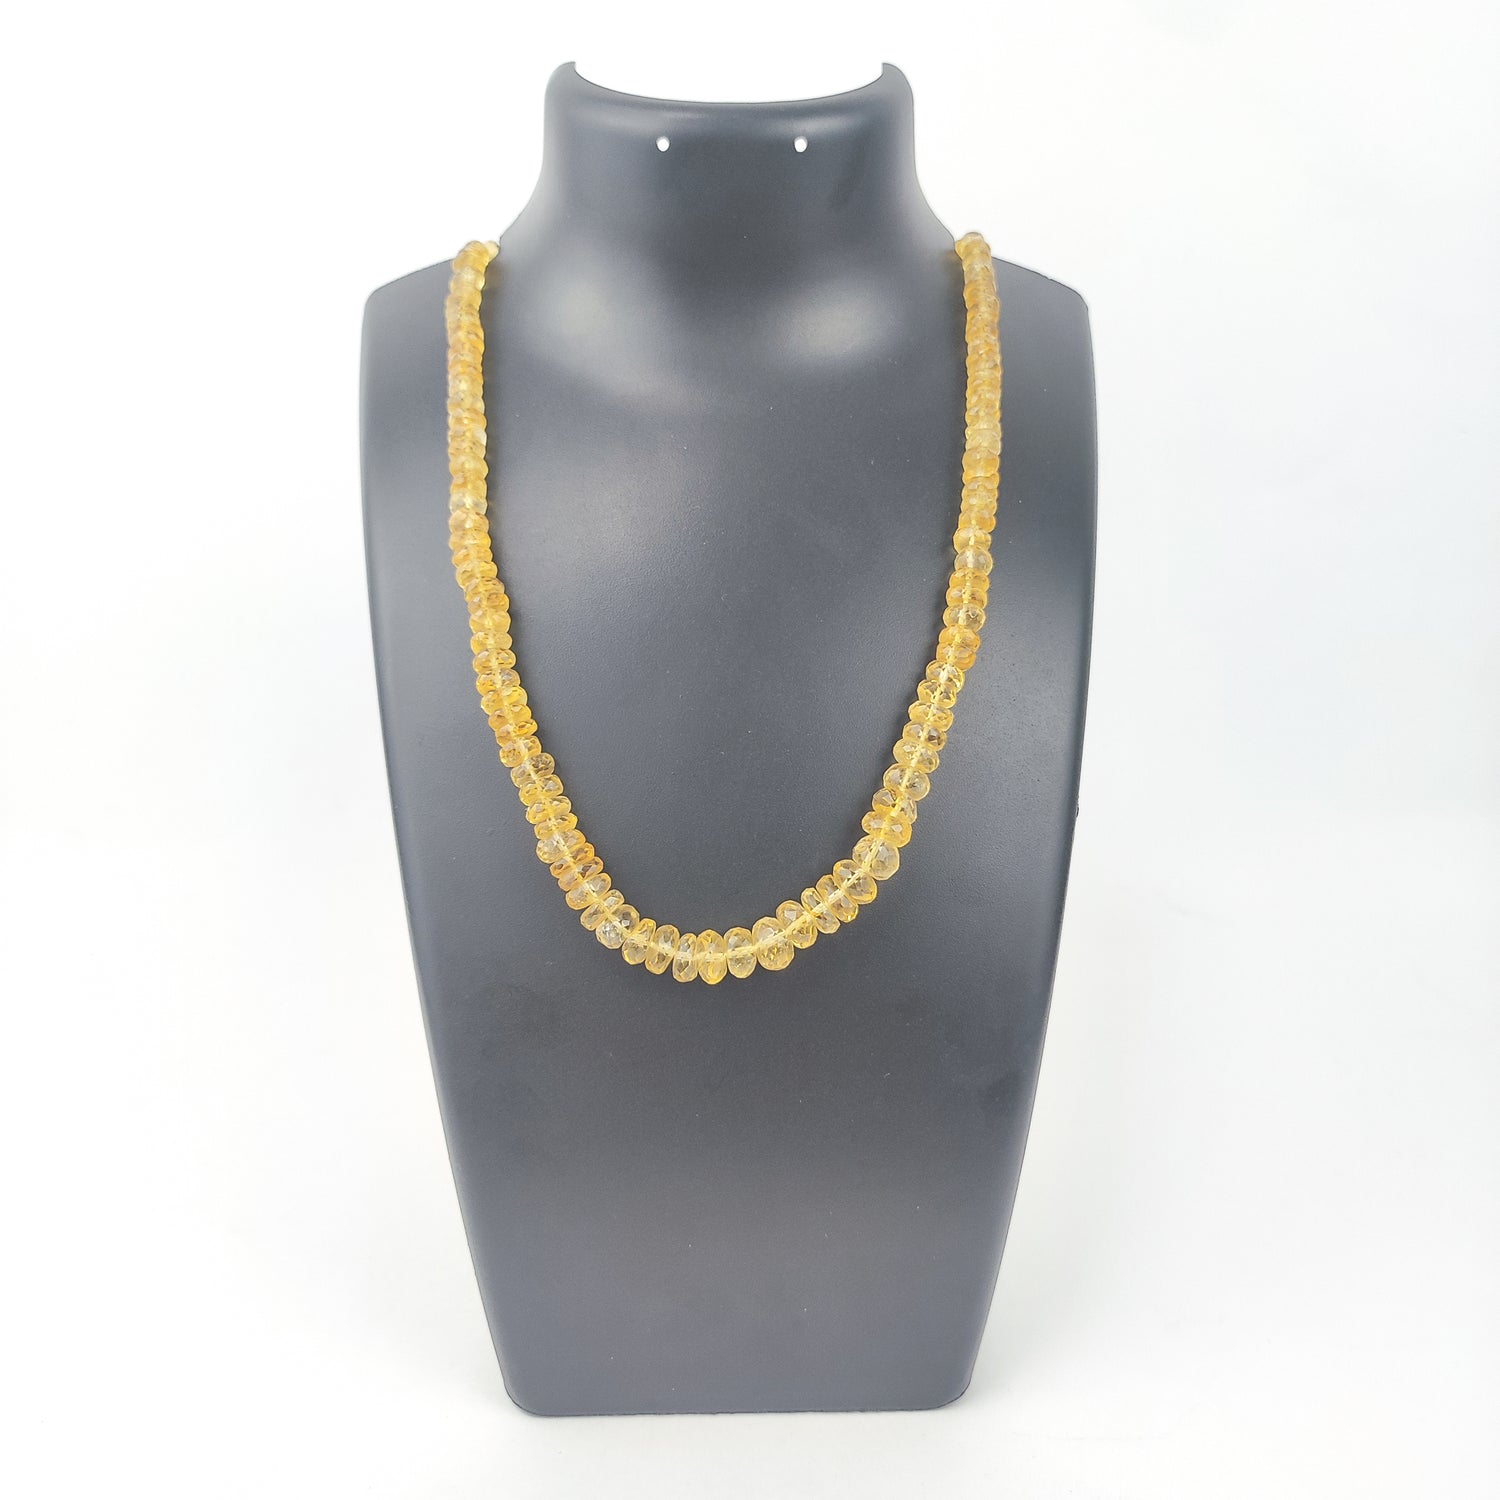 Golden Topaz Oval Beads Necklace (8mm)